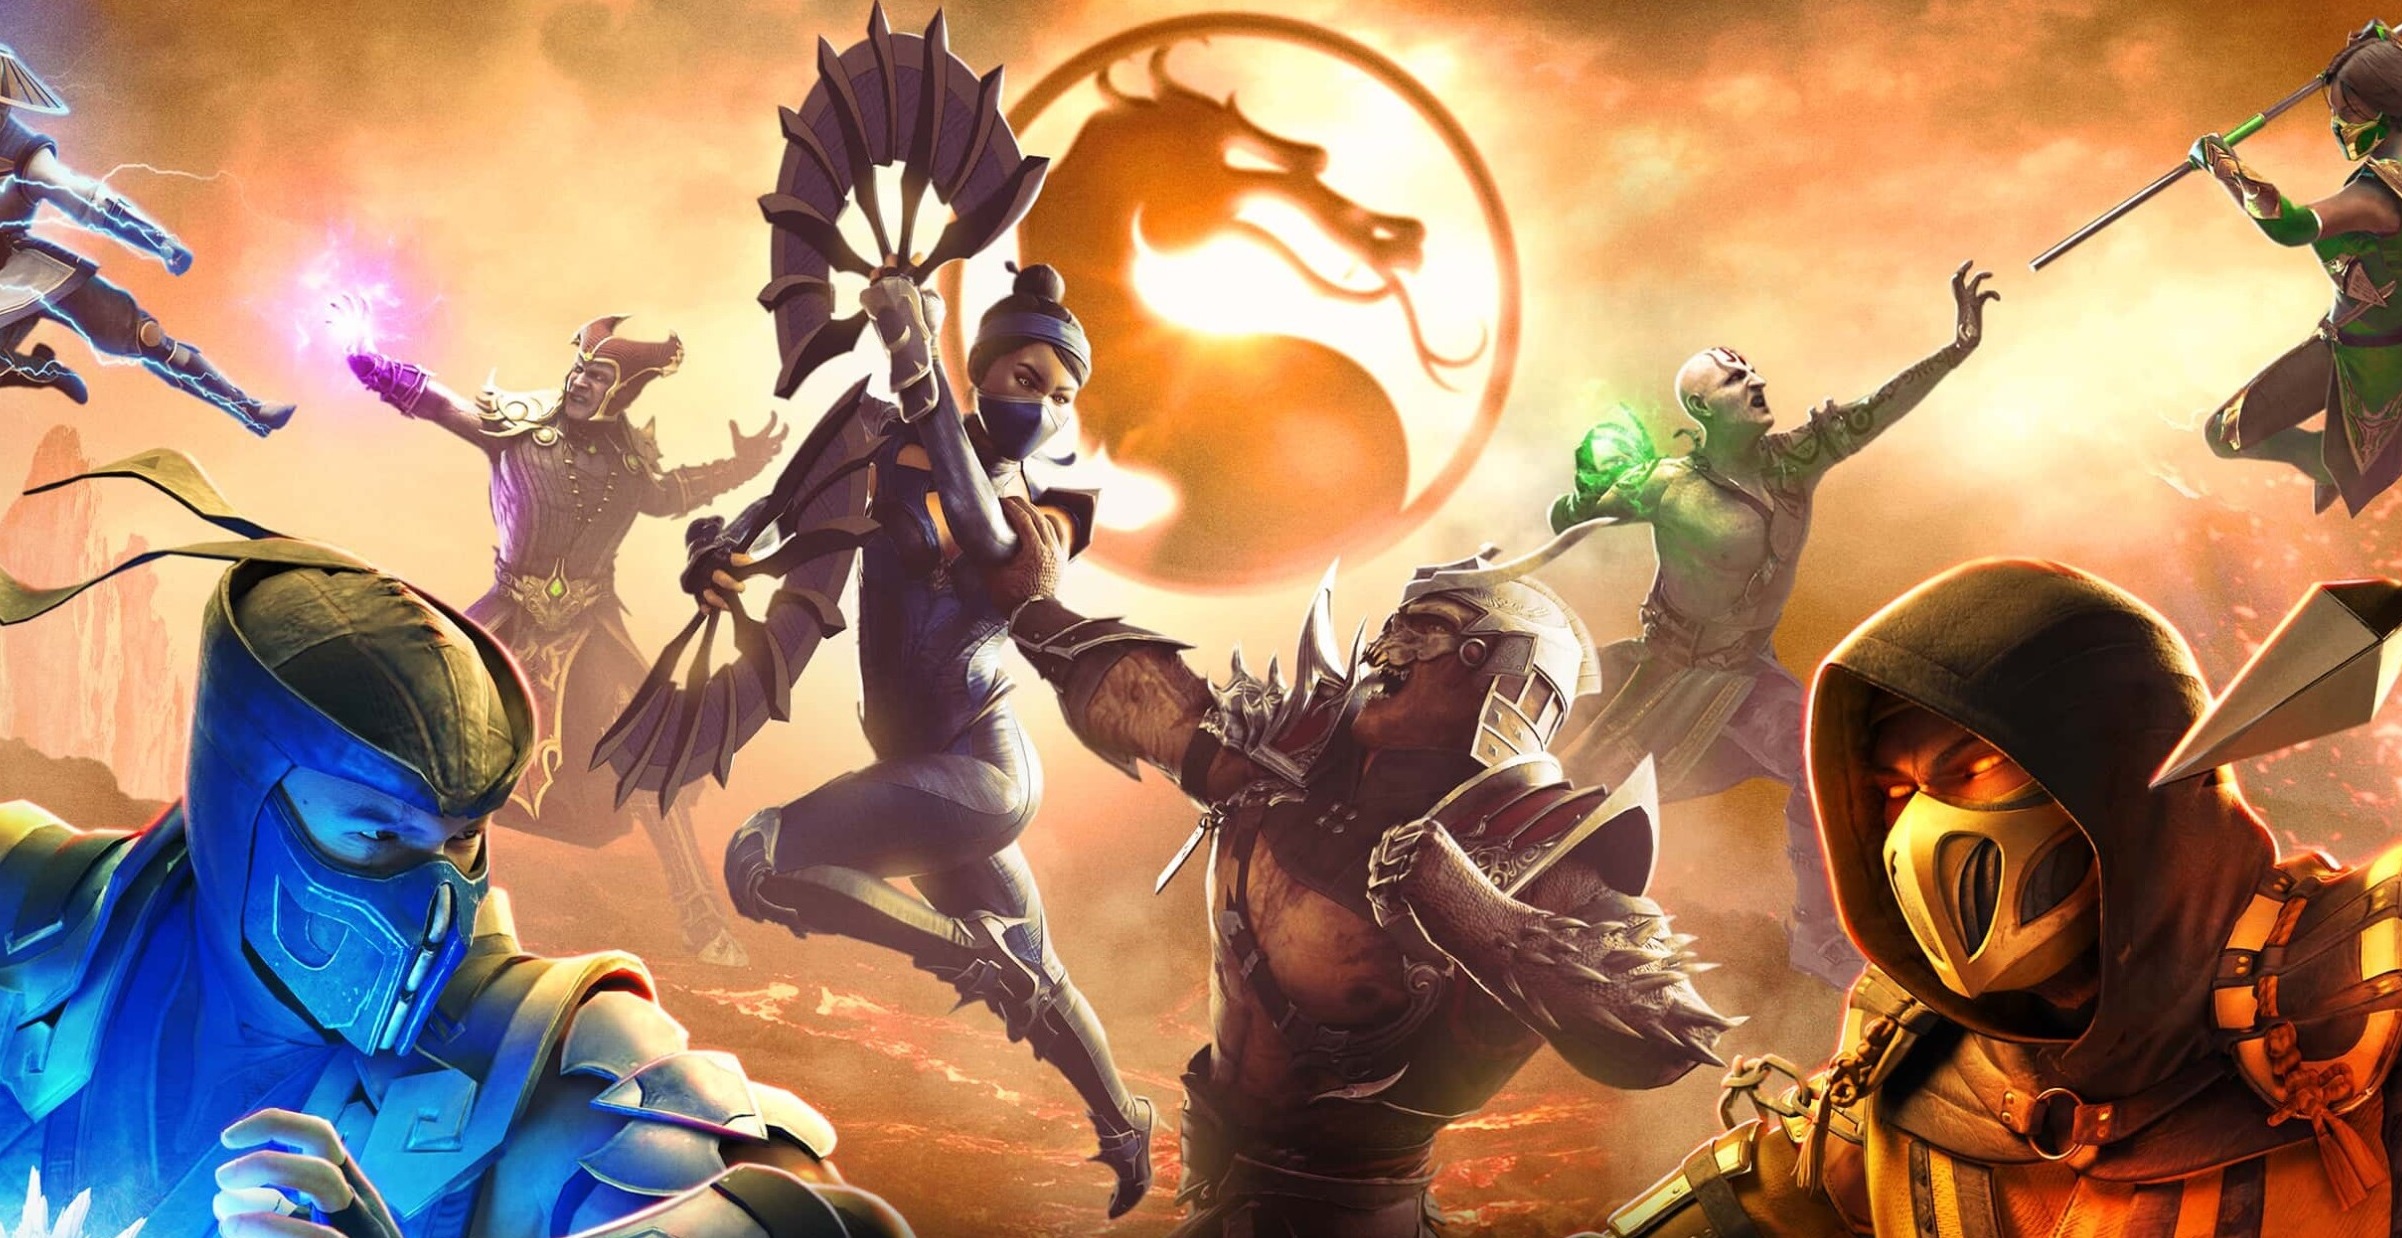 Mortal Kombat: Onslaught APK para Android - Descargar